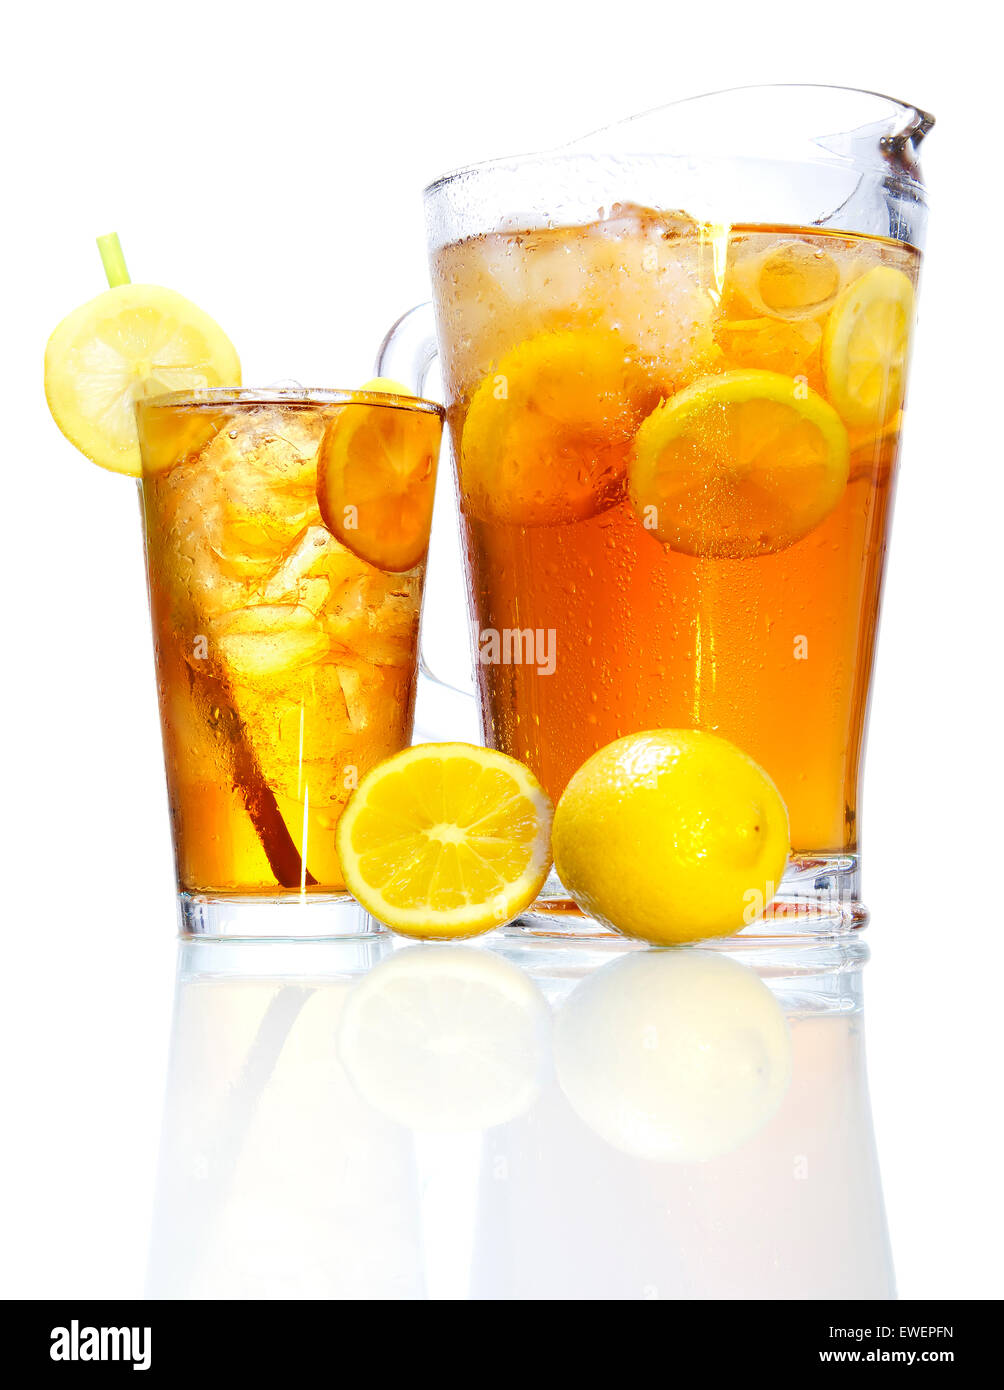 https://c8.alamy.com/comp/EWEPFN/stock-image-of-pitcher-and-glass-of-iced-tea-garnished-with-lemons-EWEPFN.jpg